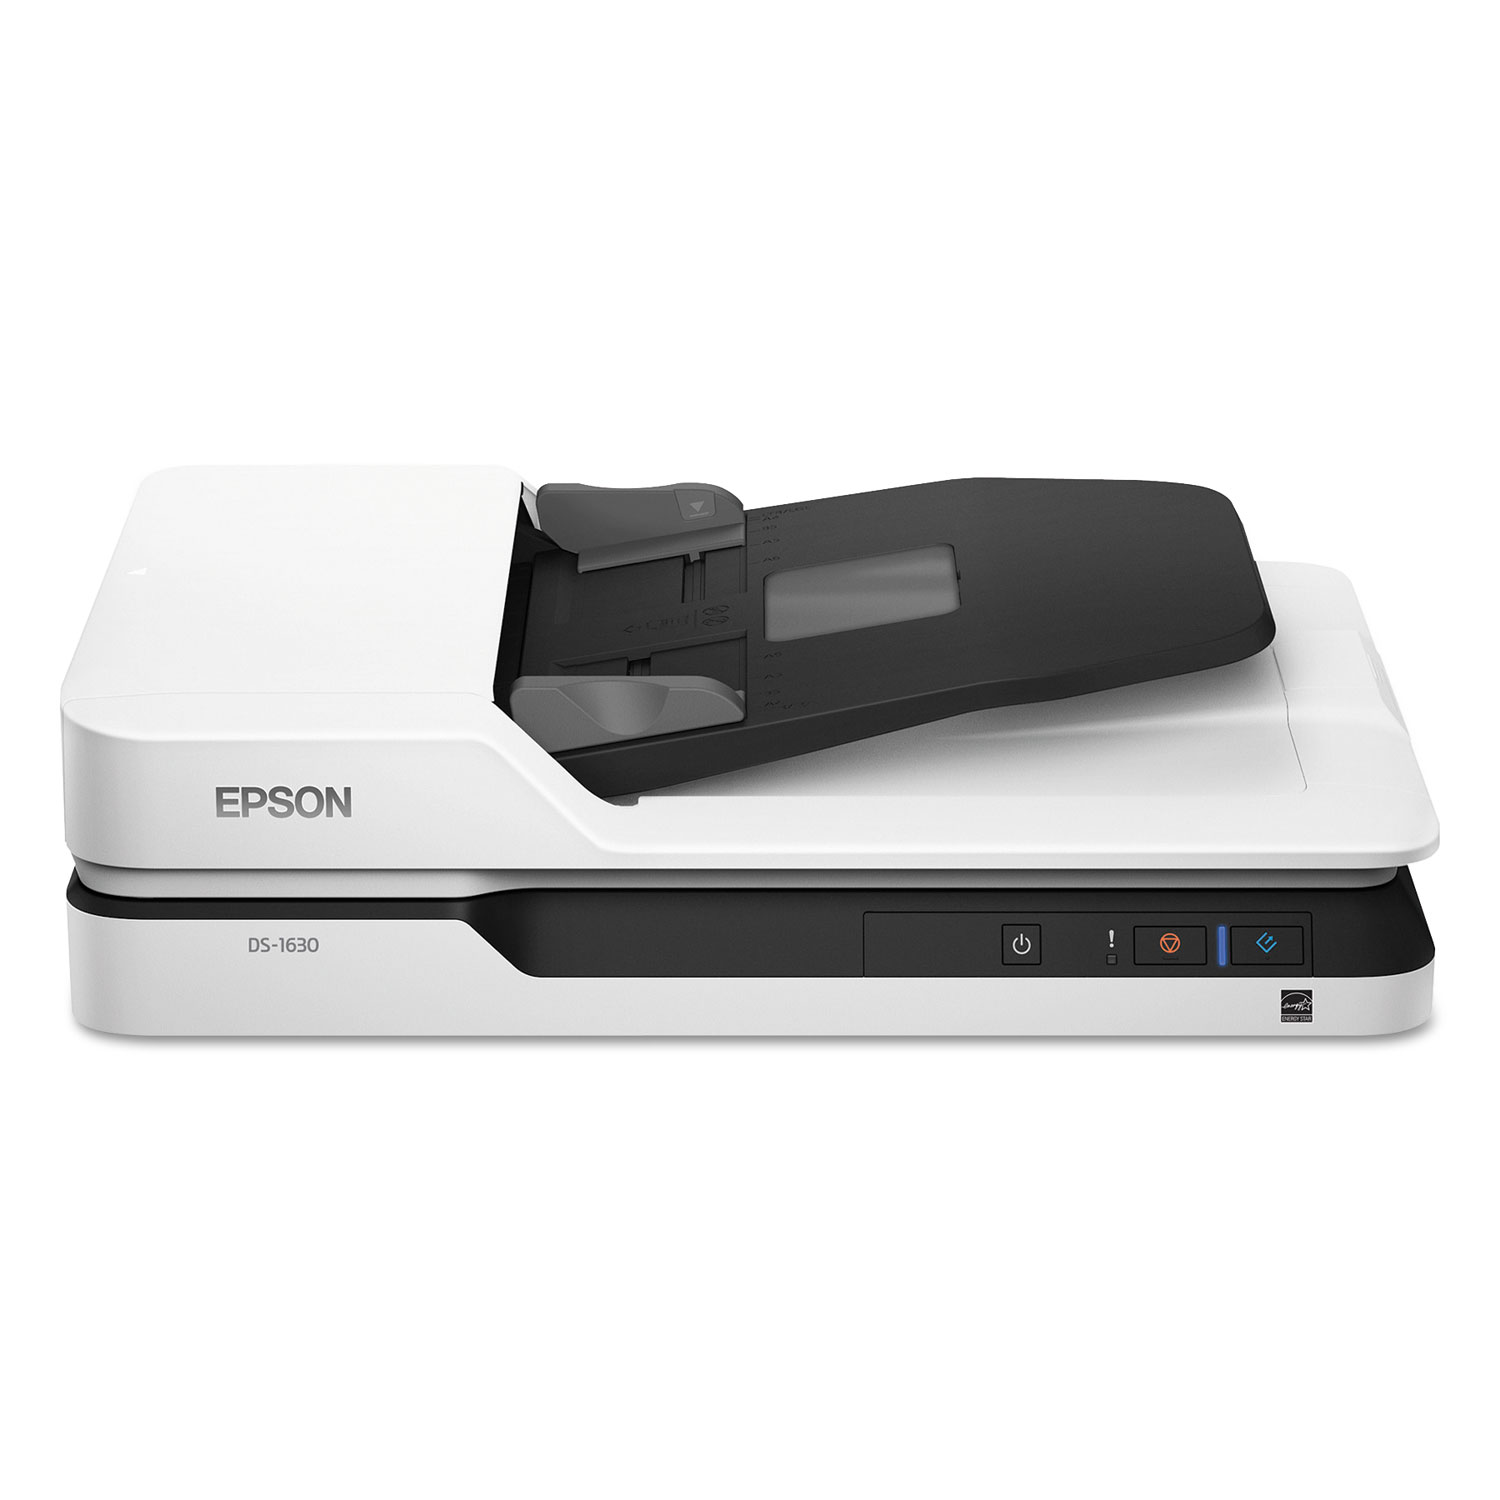  Epson B11B239201 WorkForce DS-1630 Flatbed Color Document Scanner, 1200 dpi Optical Resolution, 50-Sheet Duplex Auto Document Feeder (EPSB11B239201) 